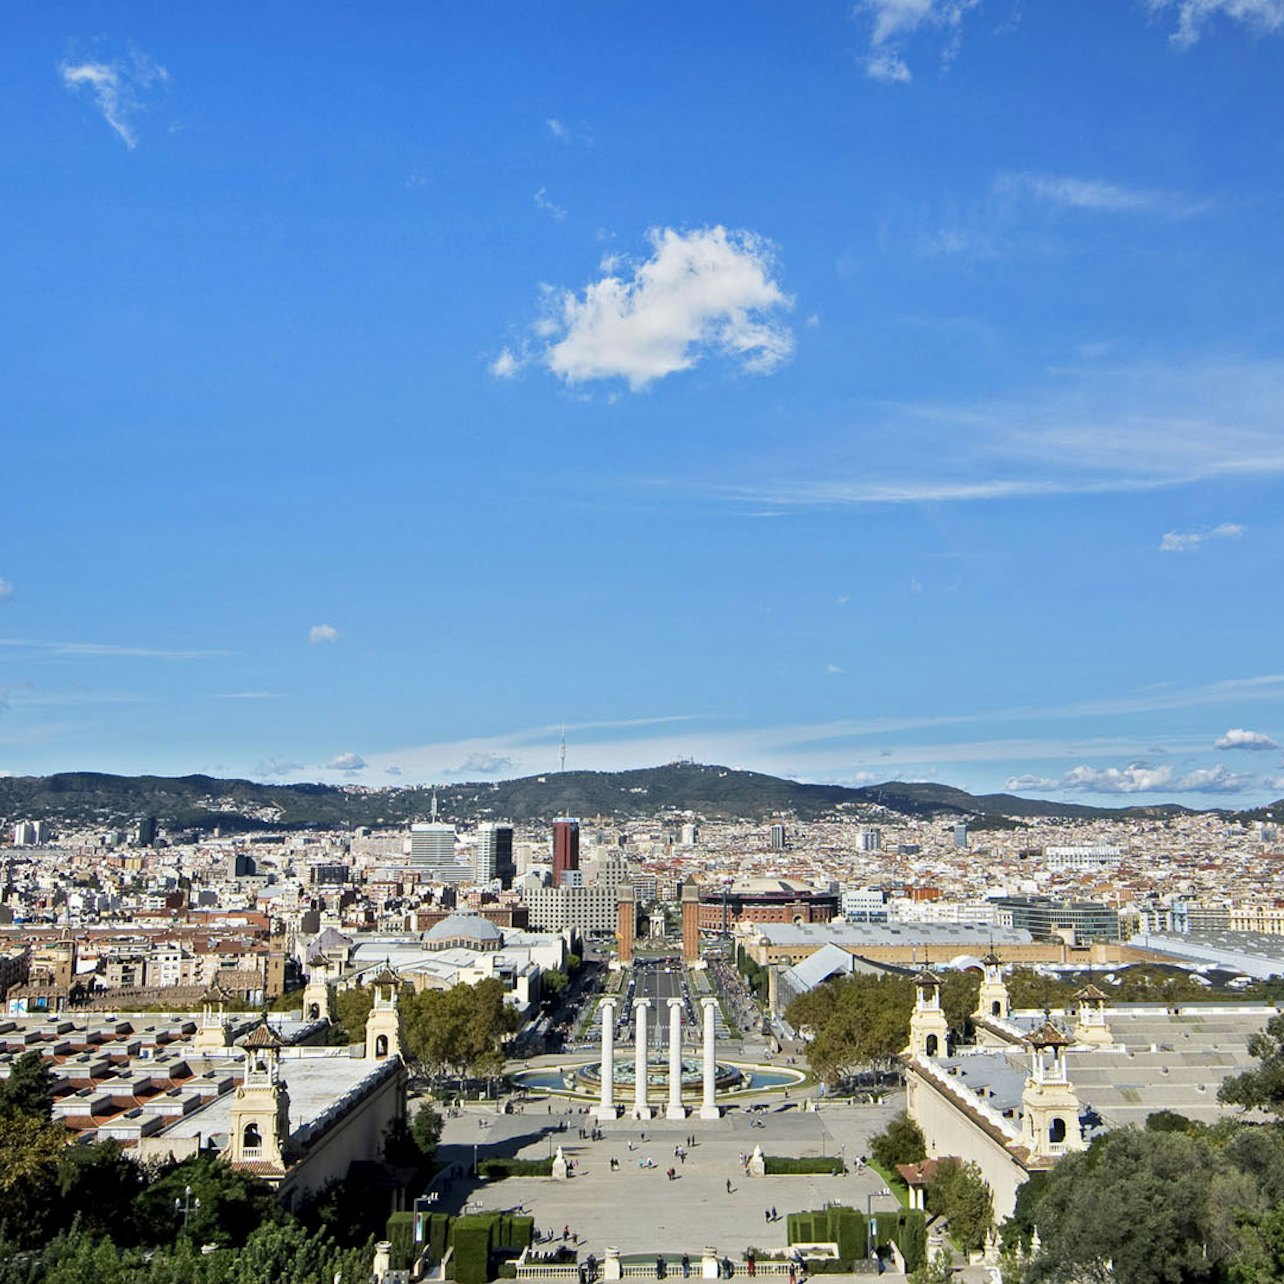 Museu Nacional d’Art de Catalunya: Skip The Line - Accommodations in Barcelona